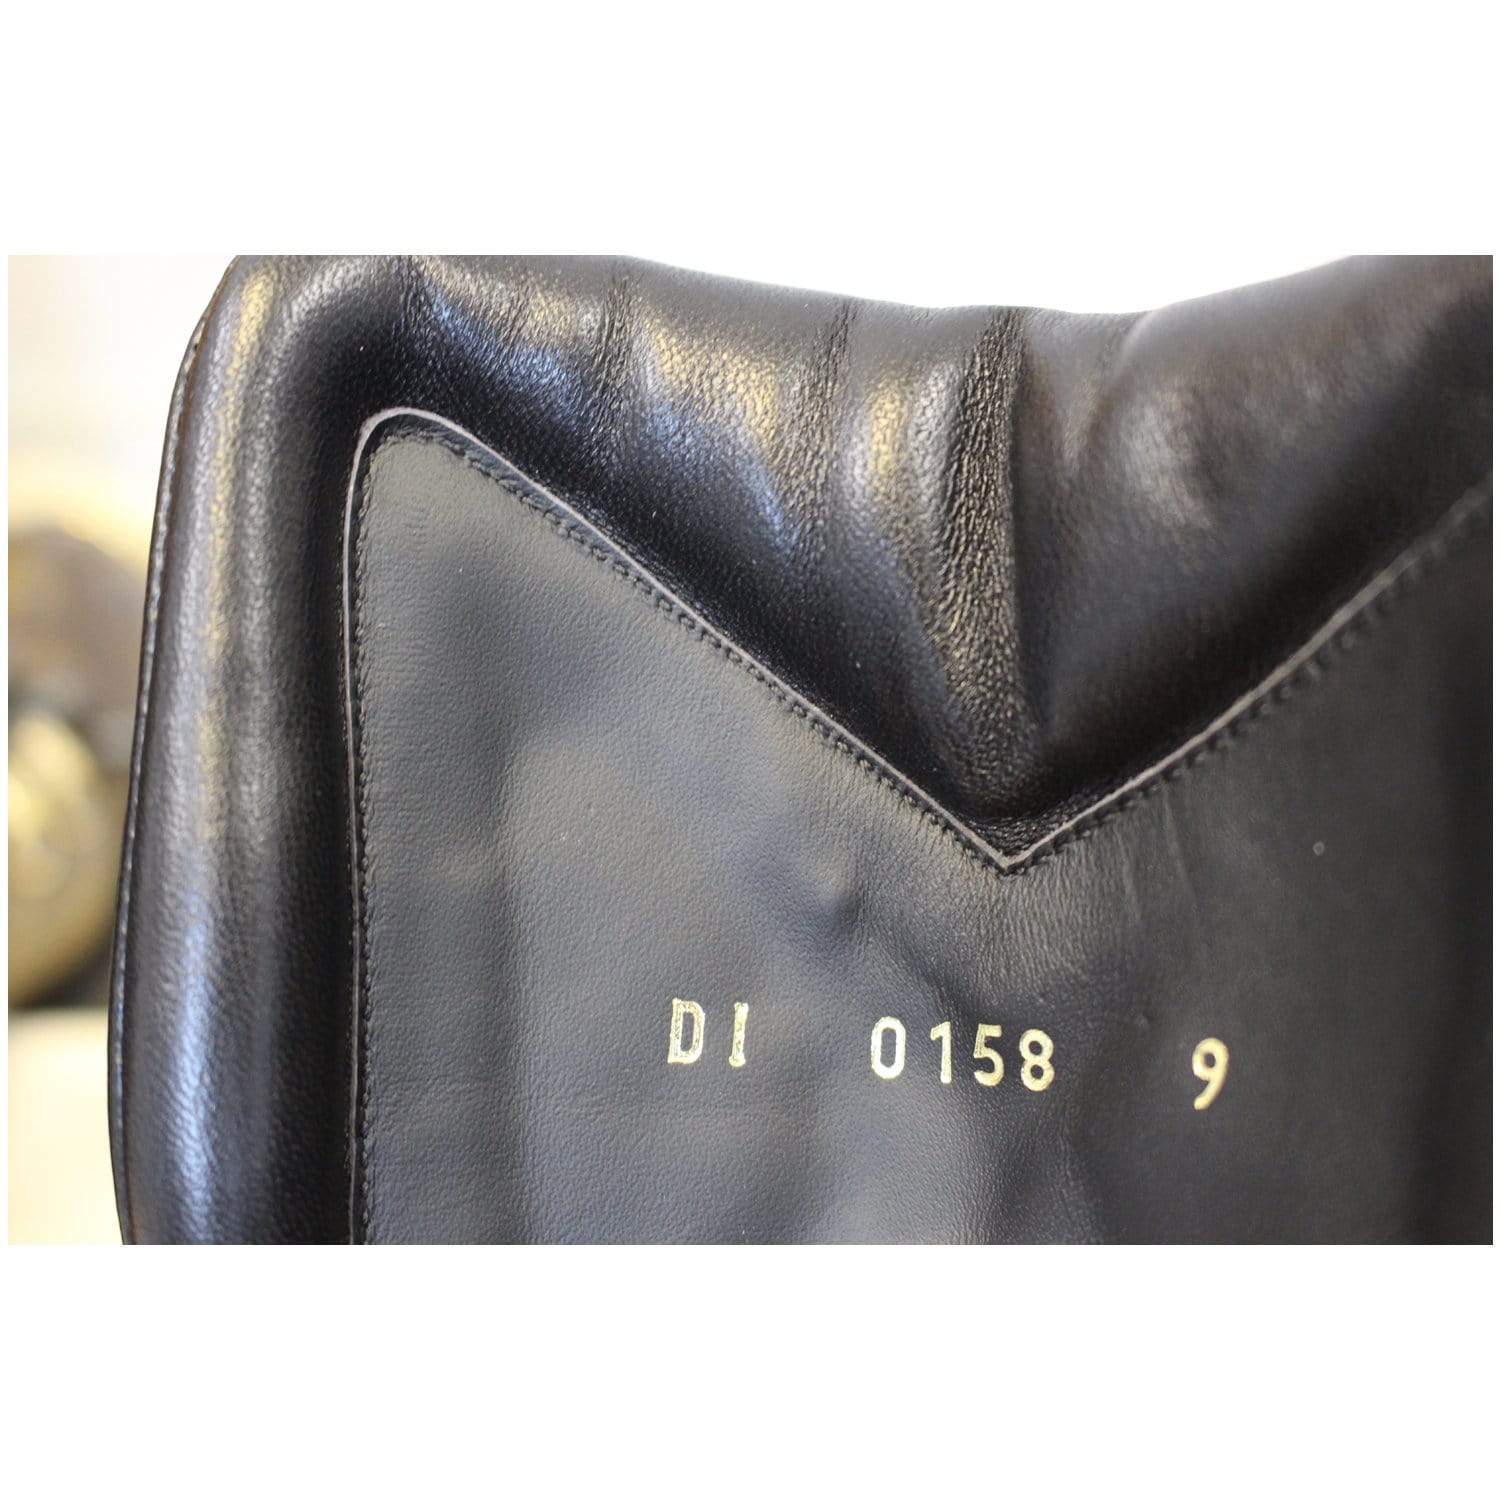 Lv outland boots Louis Vuitton Brown size 40 EU in Rubber - 36089929